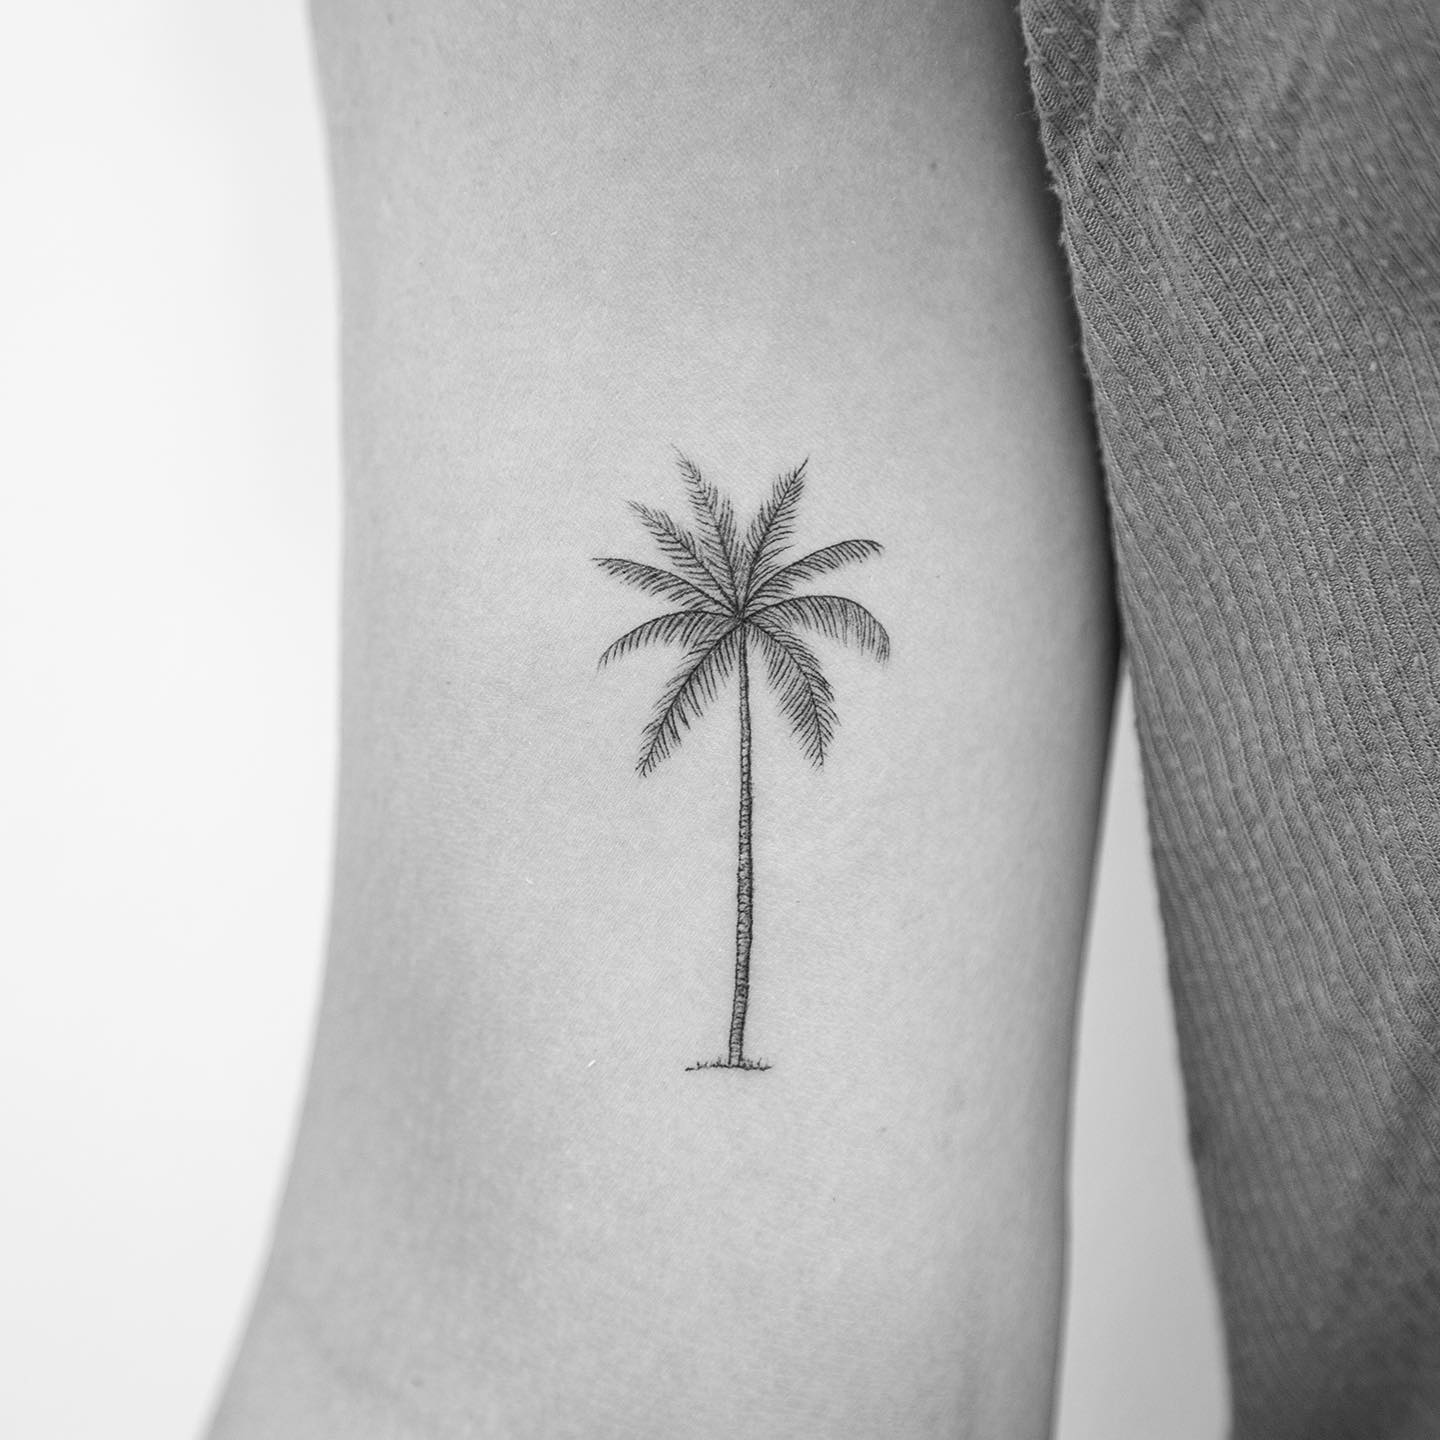 Tatuaje de árbol de palma con puntos